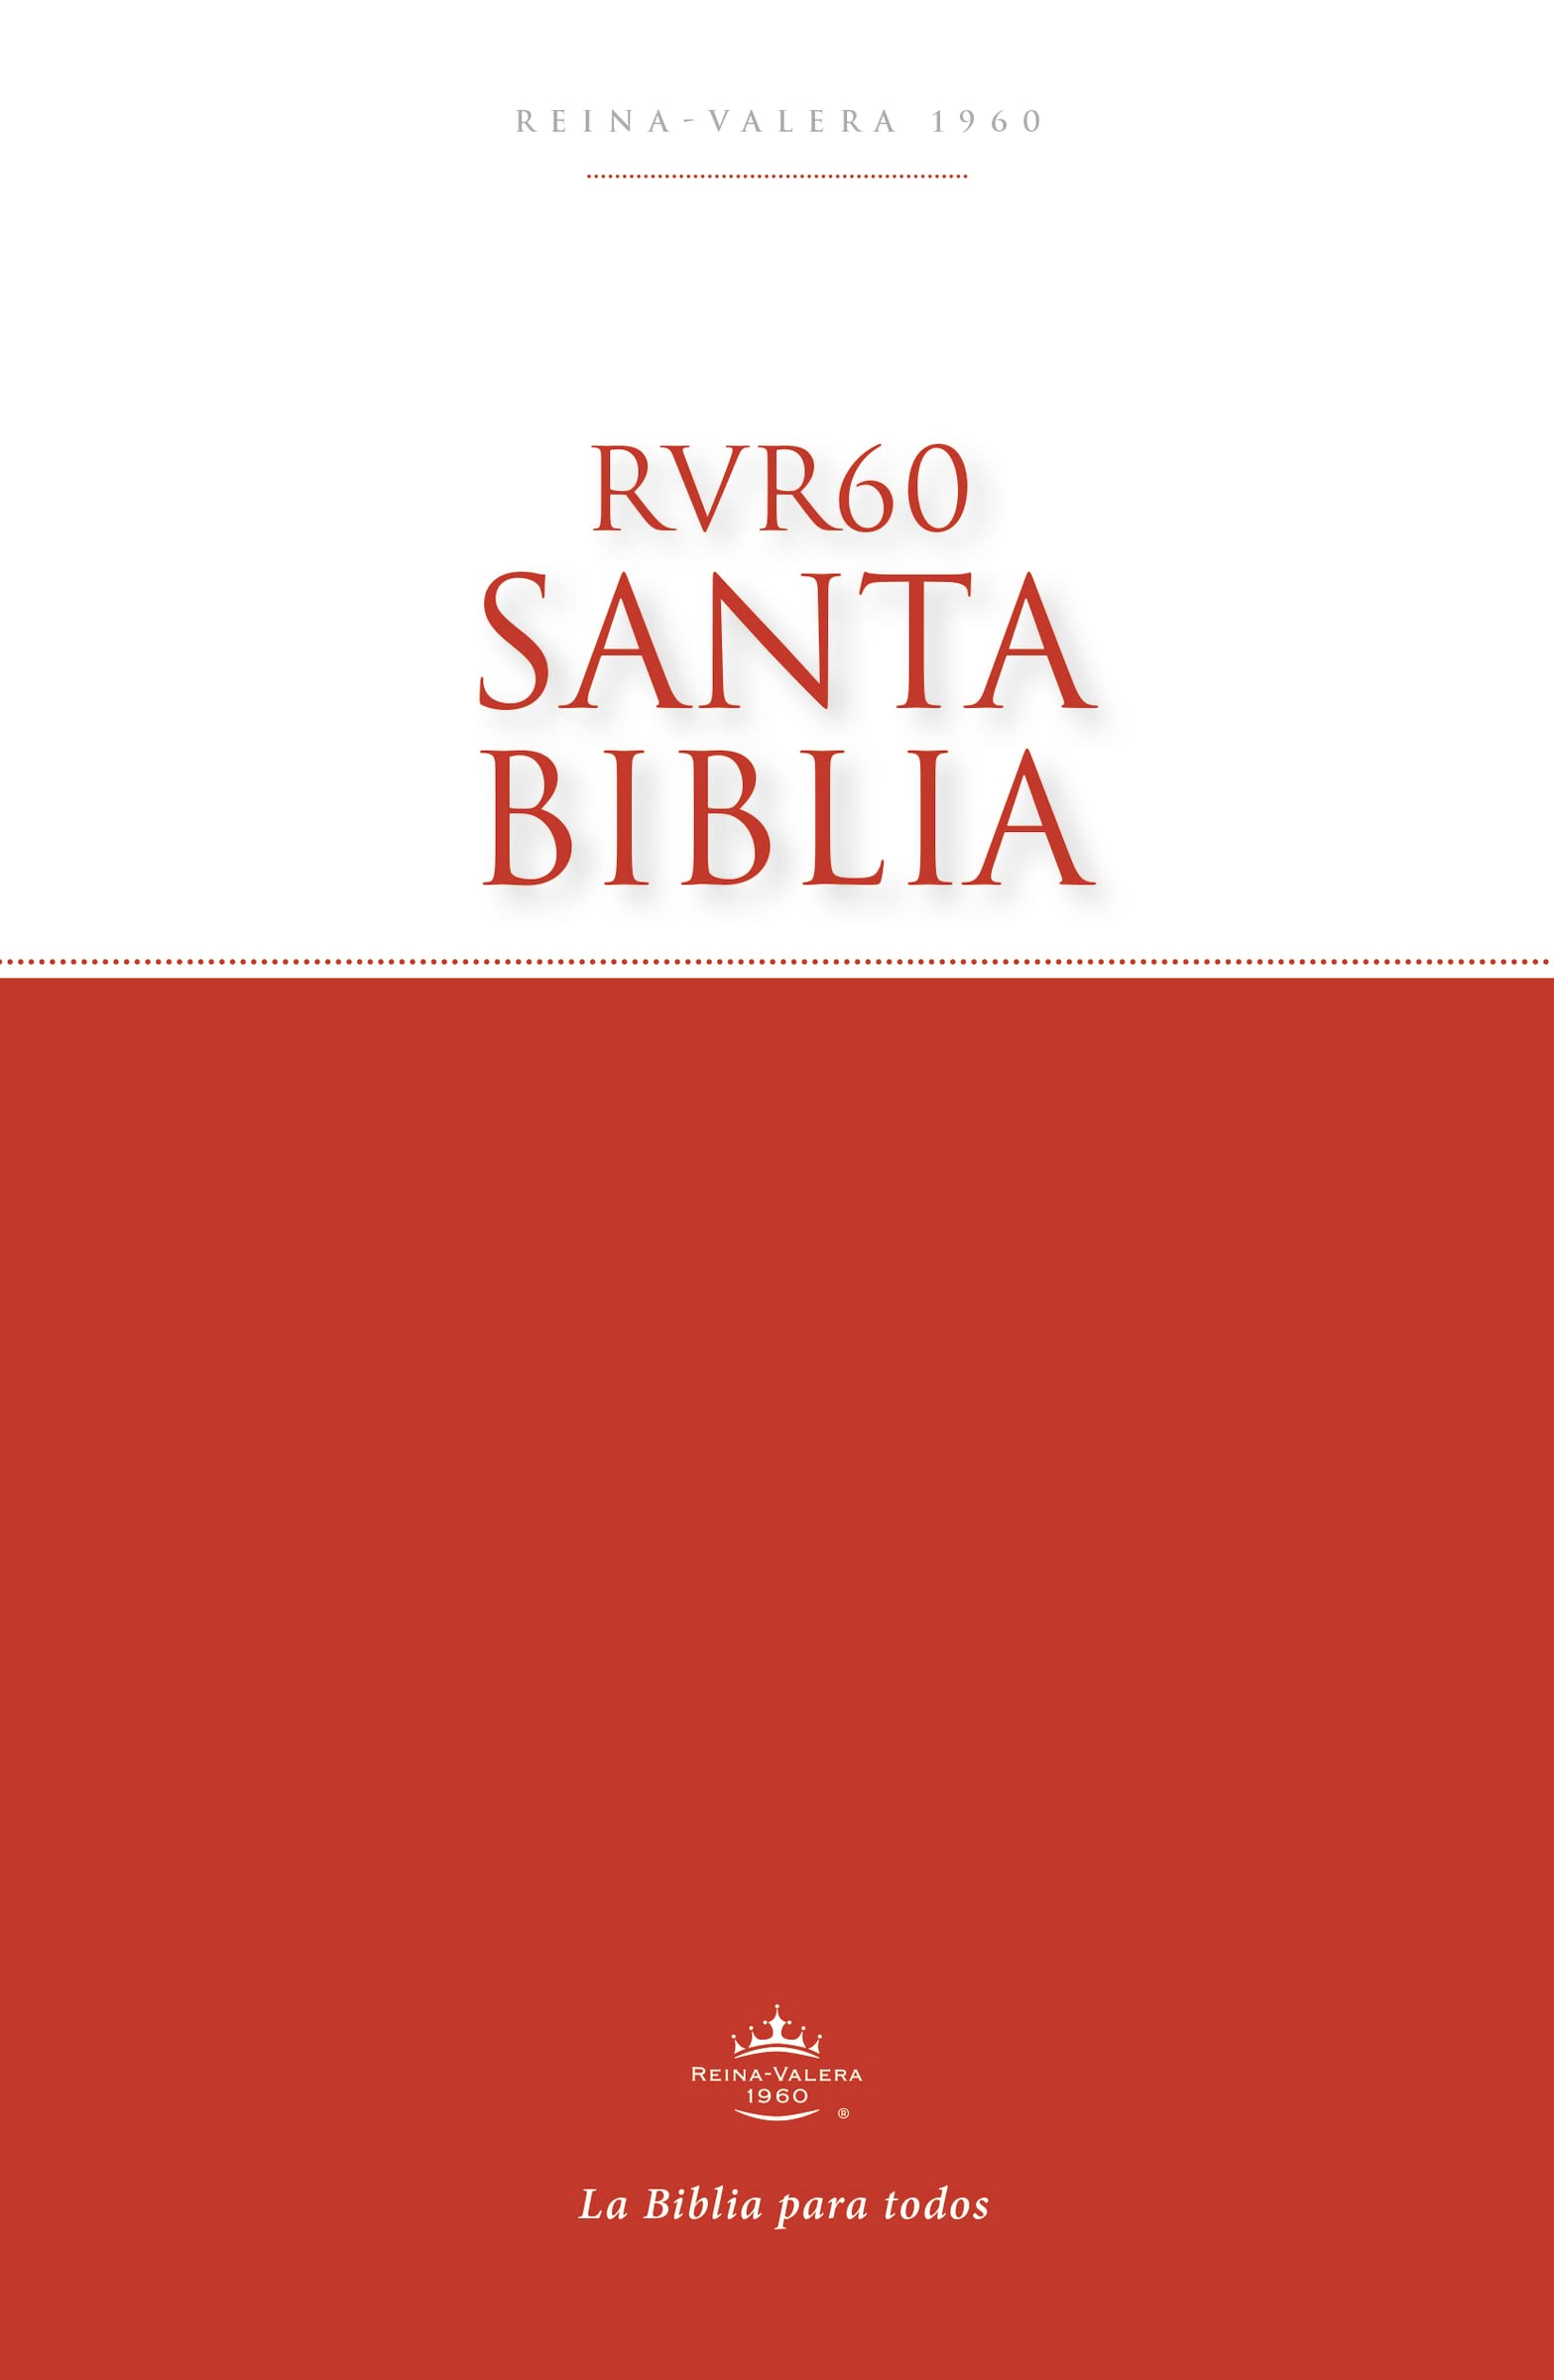 Reina Valera 1960 Santa Biblia Edición Económica, Tapa Rústica (Spanish Edition)